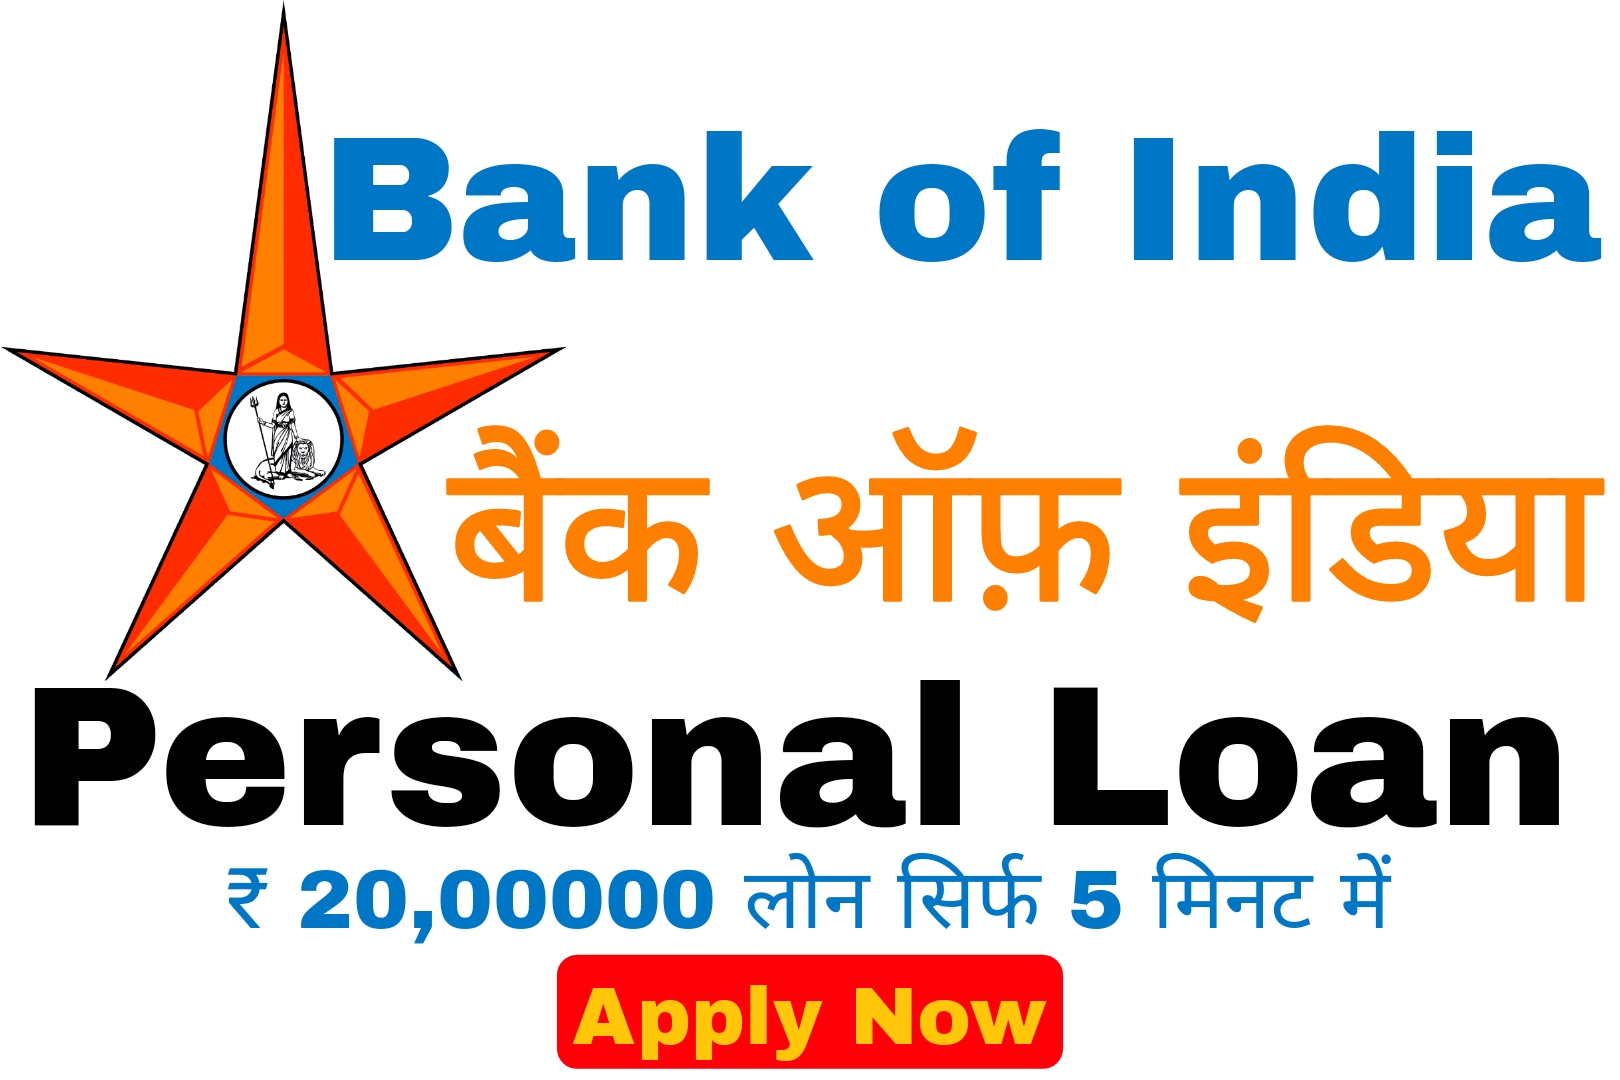 Bank of India Personal Loan In Hindi